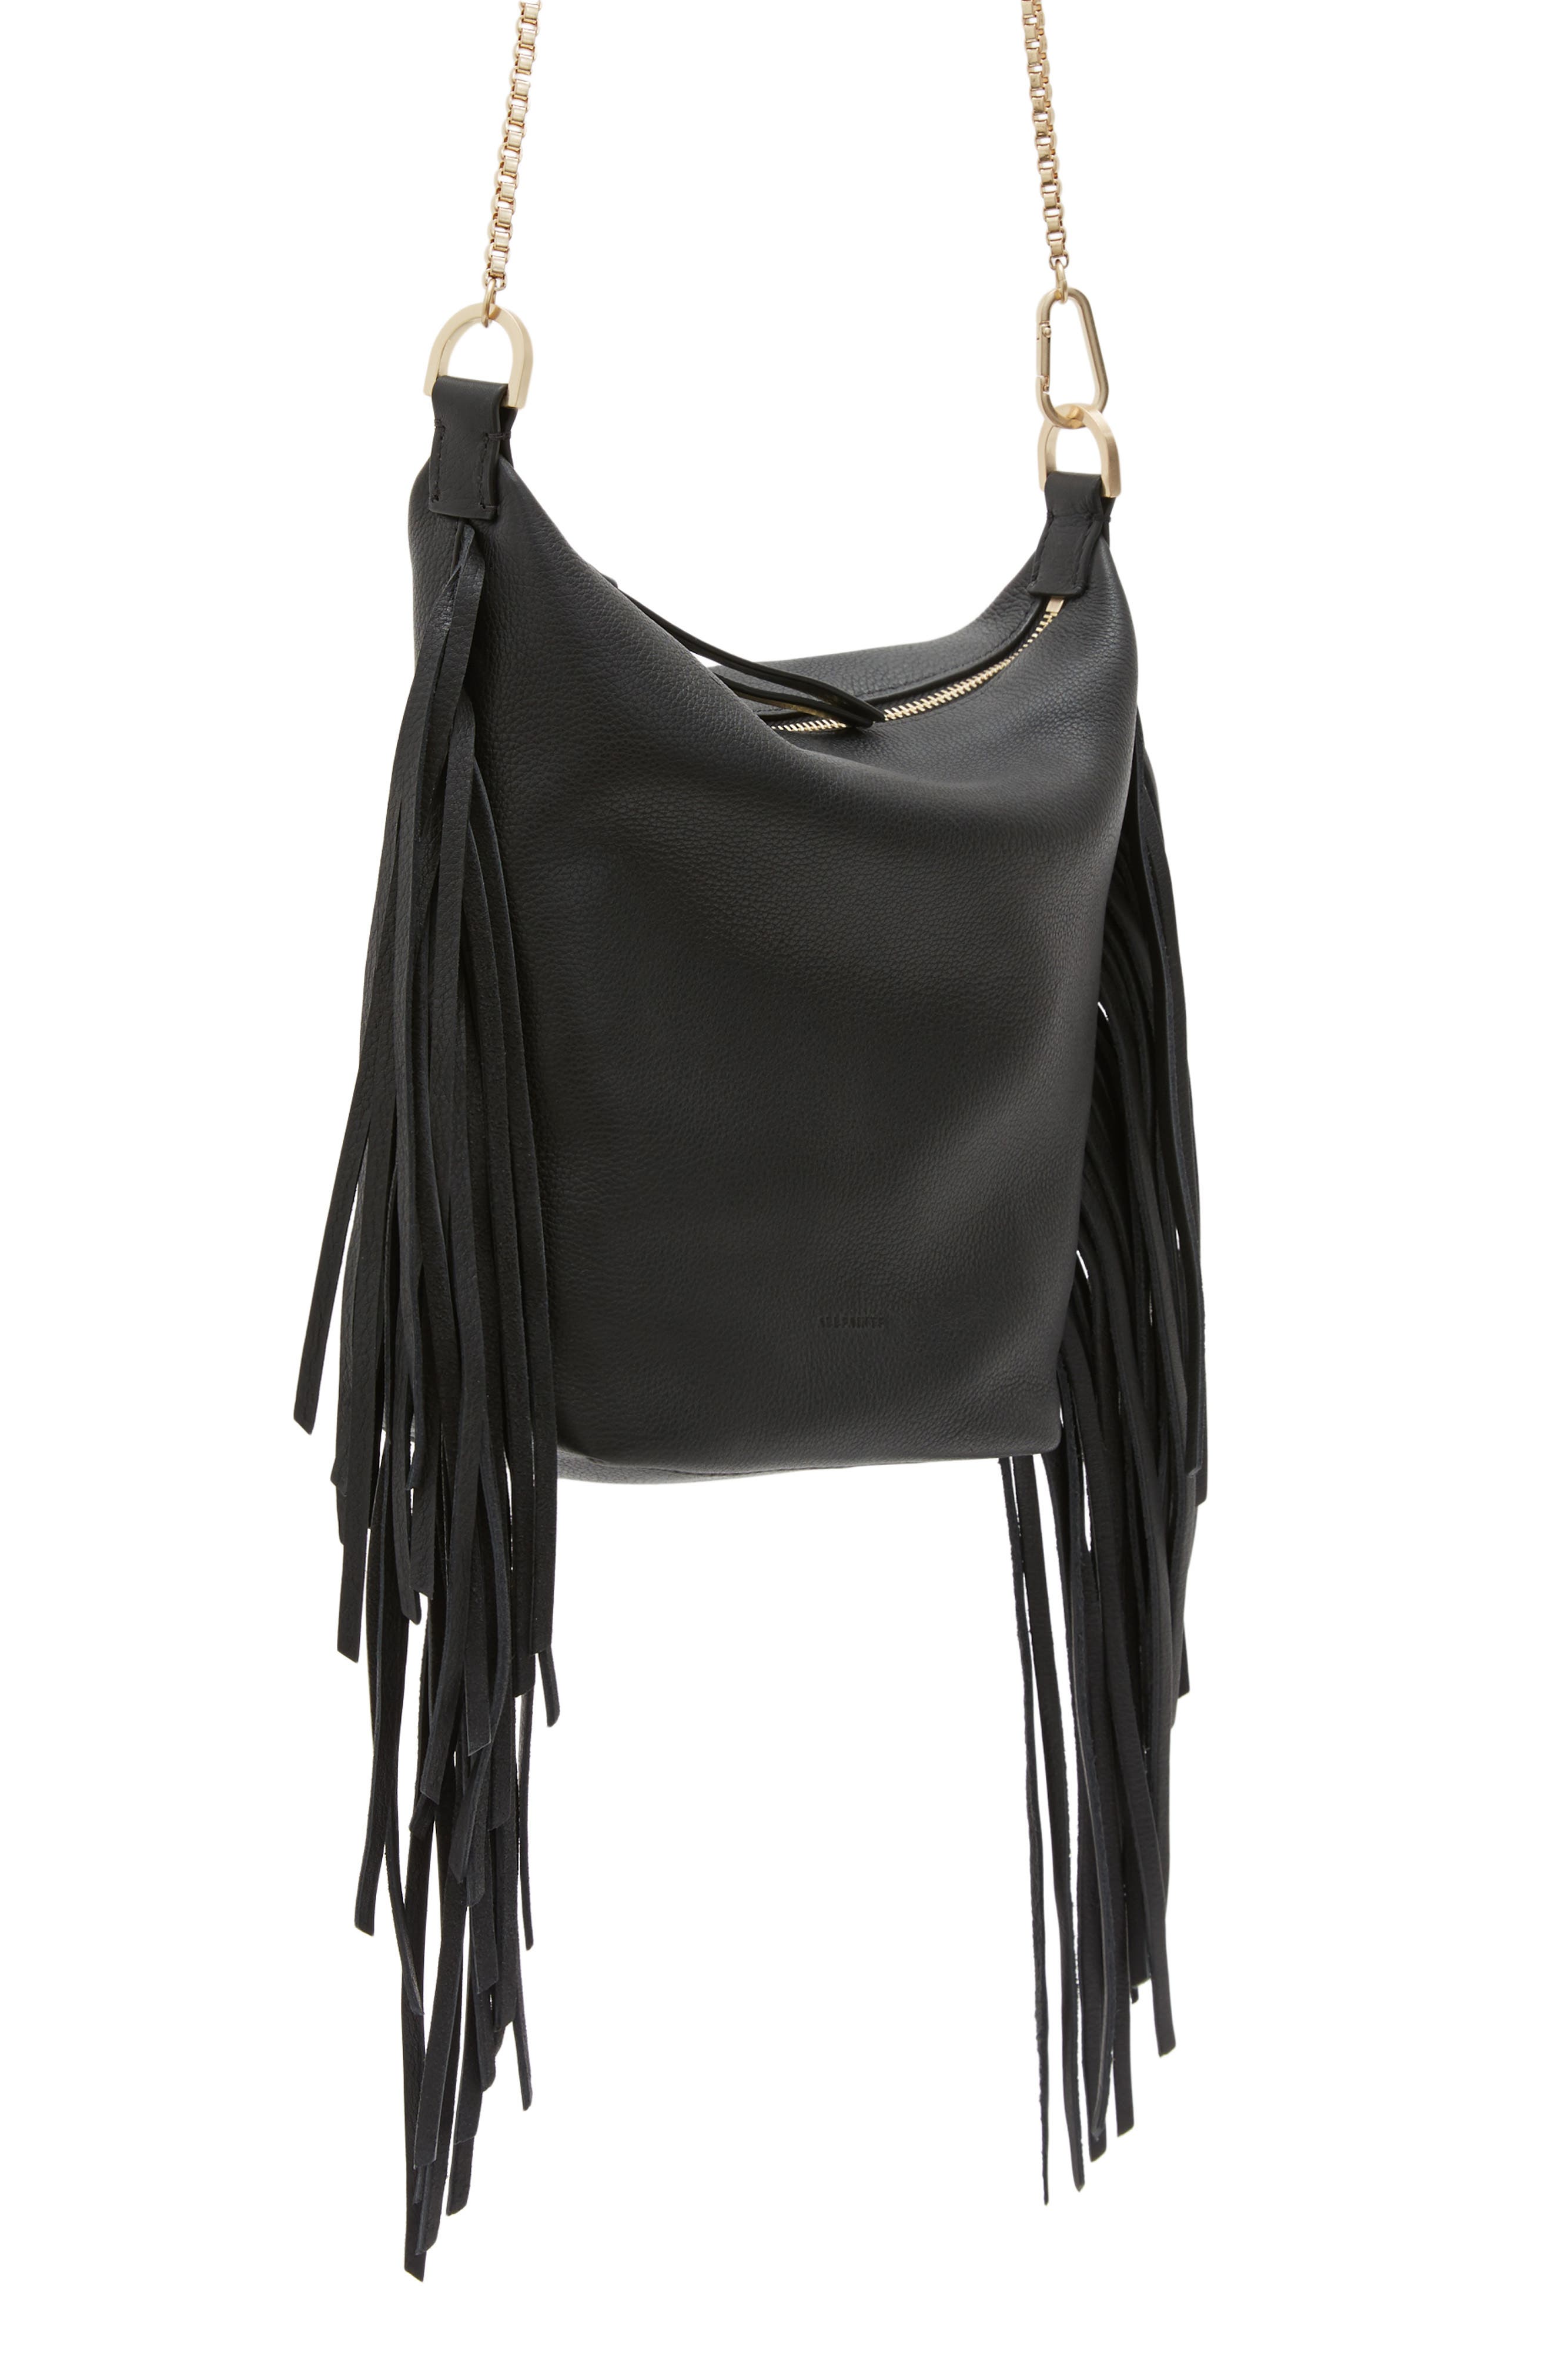 AllSaints Women's Half Moon Leather Crossbody Bag, Black